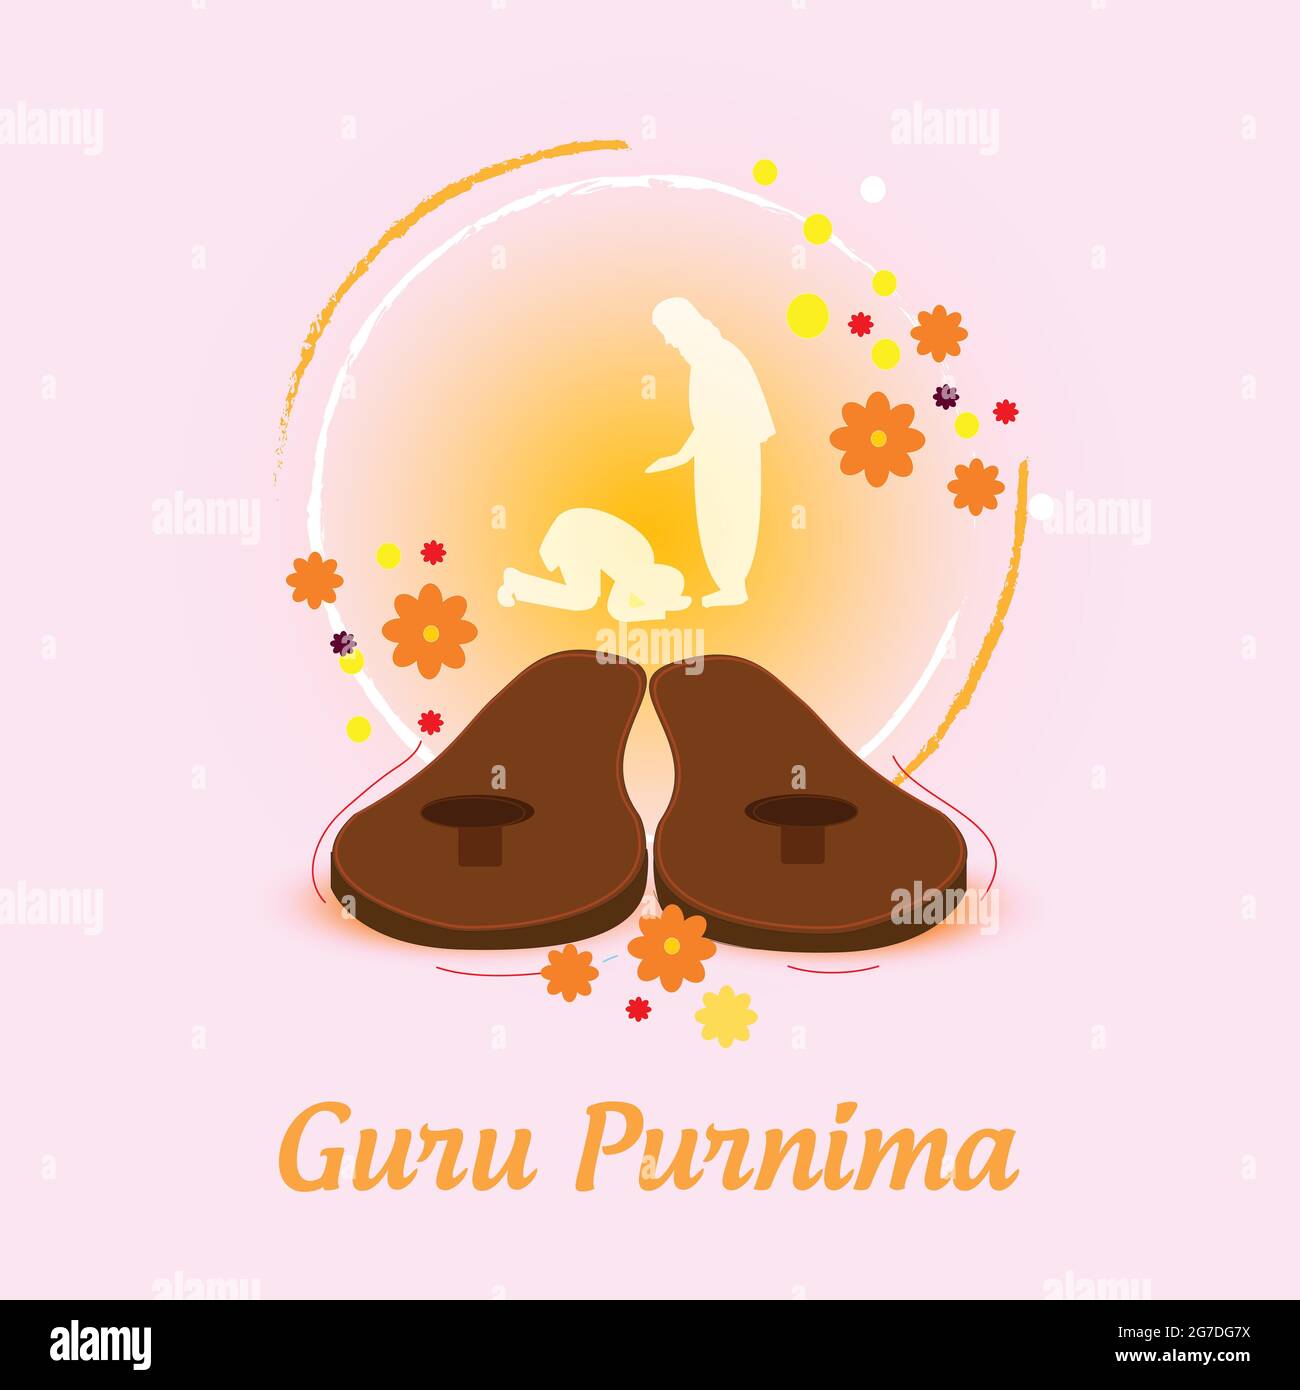 Illustration of Guru Purnima with gurus Paduka and background is decorated with guru blessing his shisha. Stock Vector